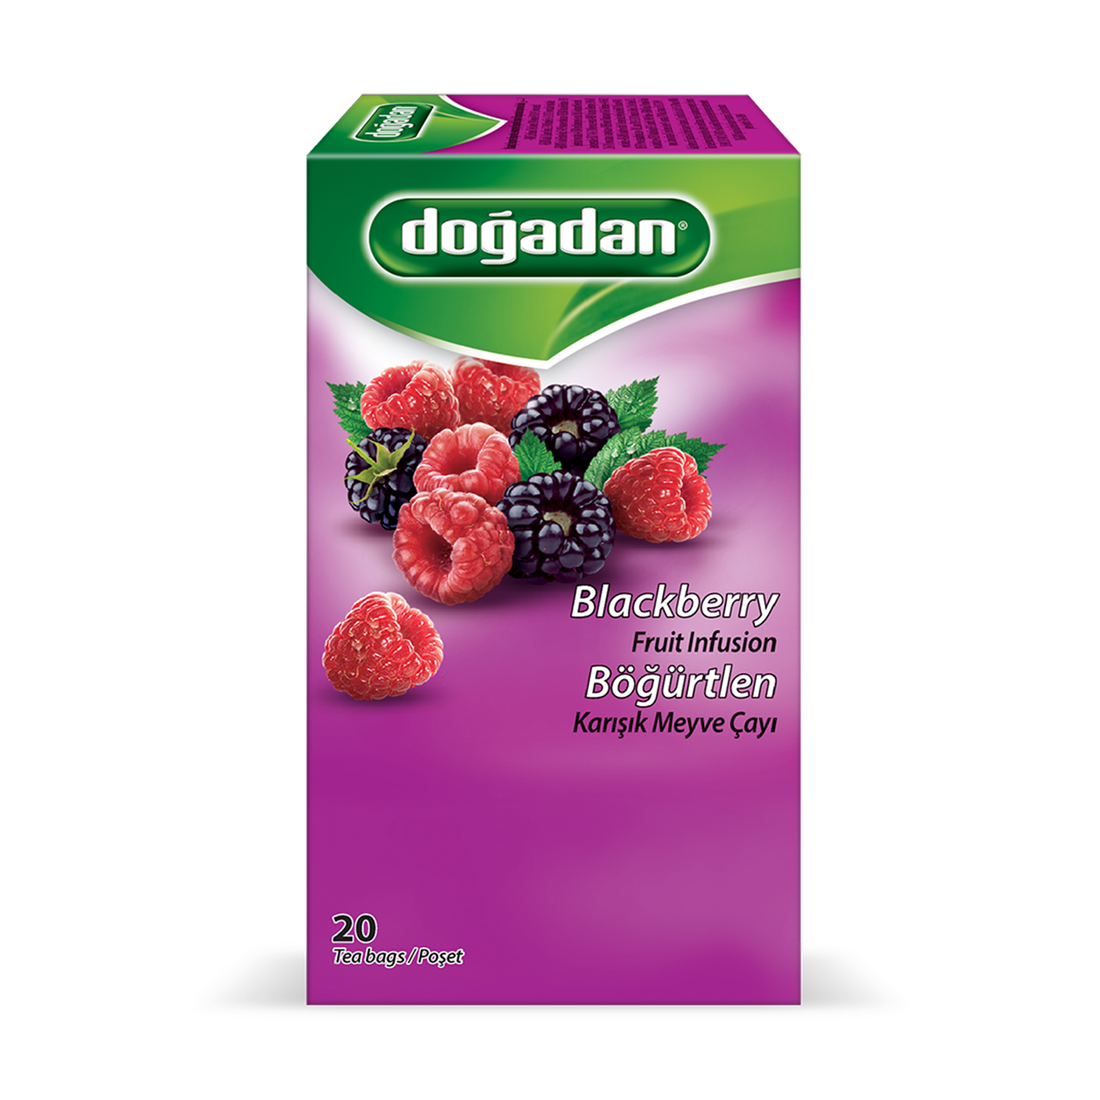 [Free Shipping] Dogal Support Set No.1 Dogadan 6 types of herbal tea + Turkish tea set